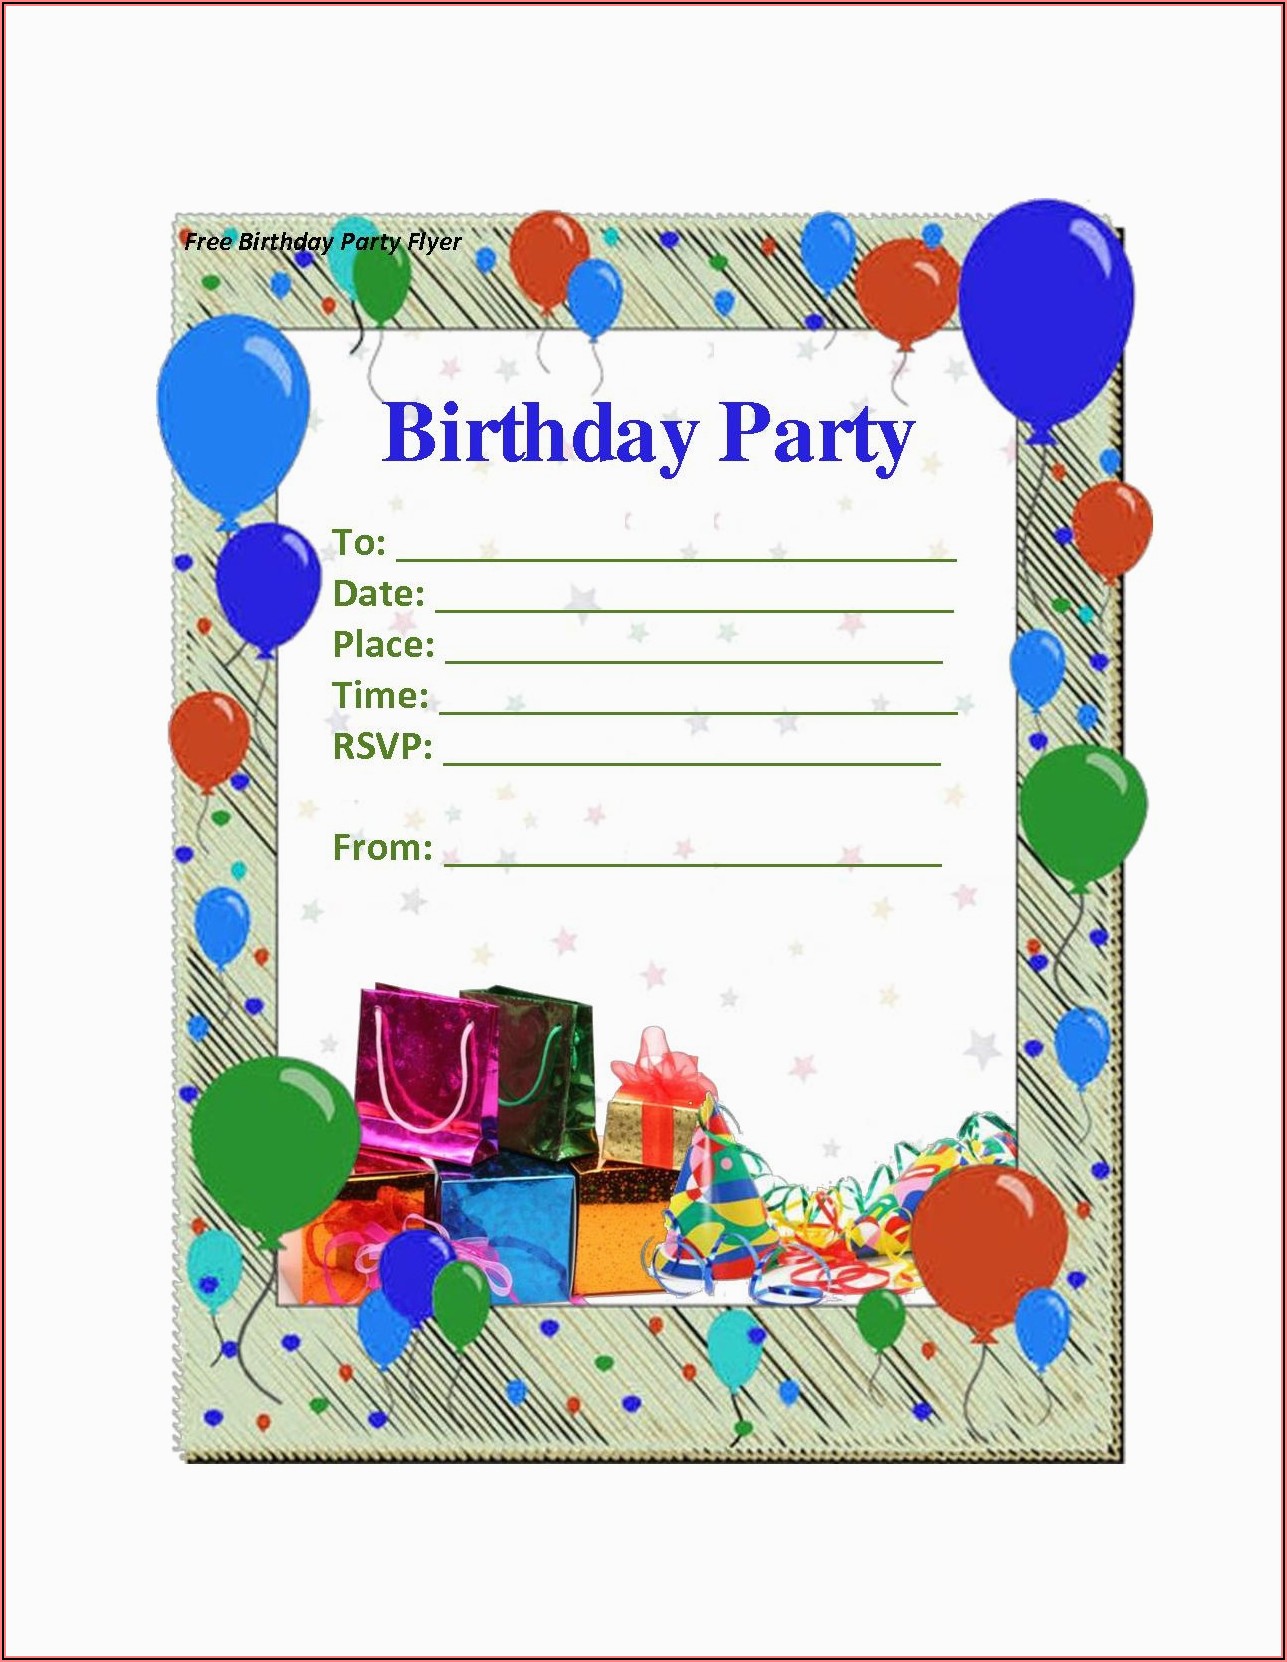 Creating Birthday Invitations Free Online